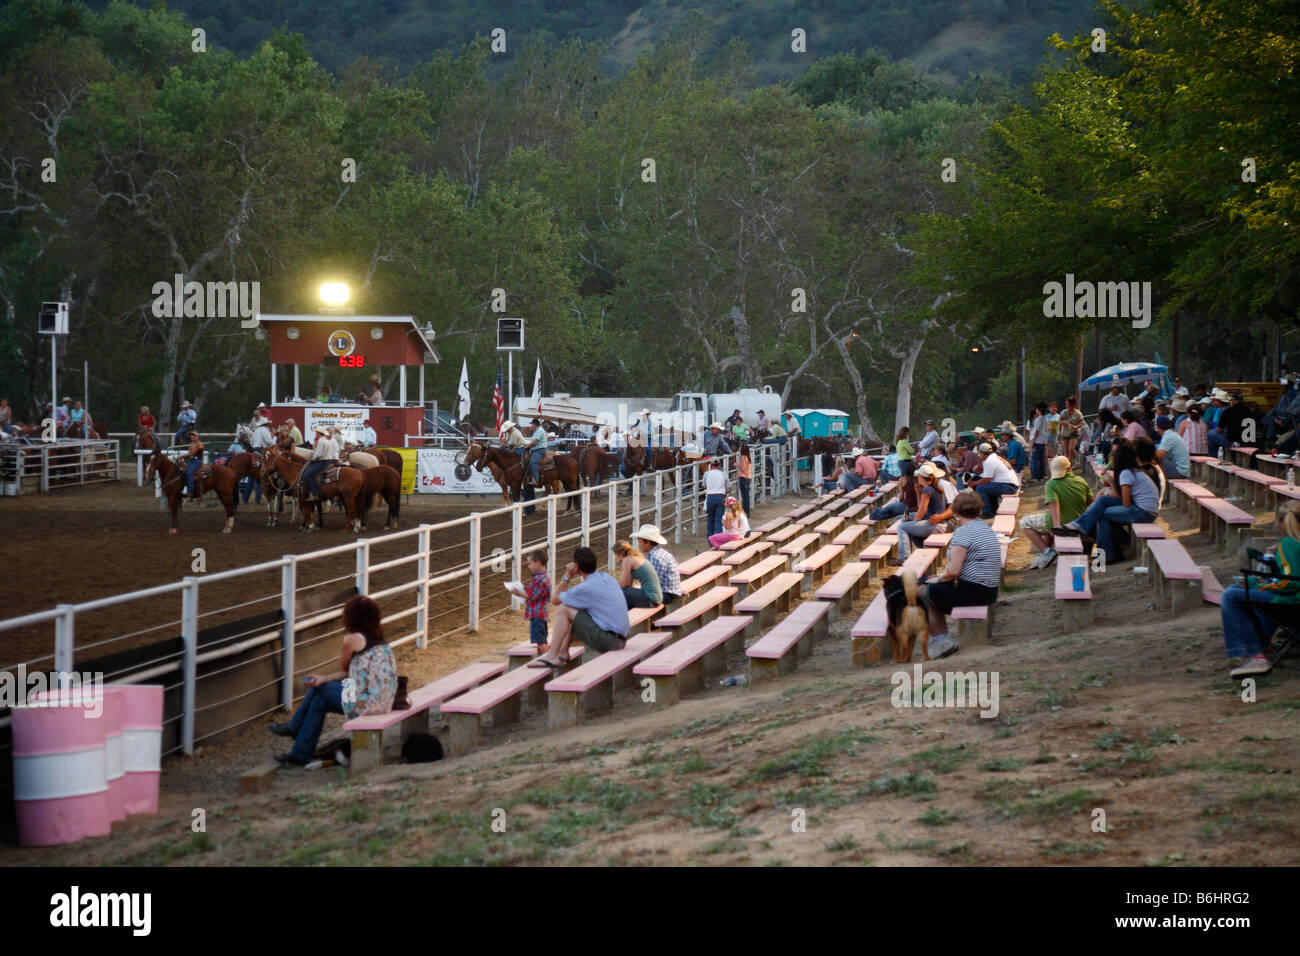 Watching the rodeo at Three Rivers, California, USA Stock Photo